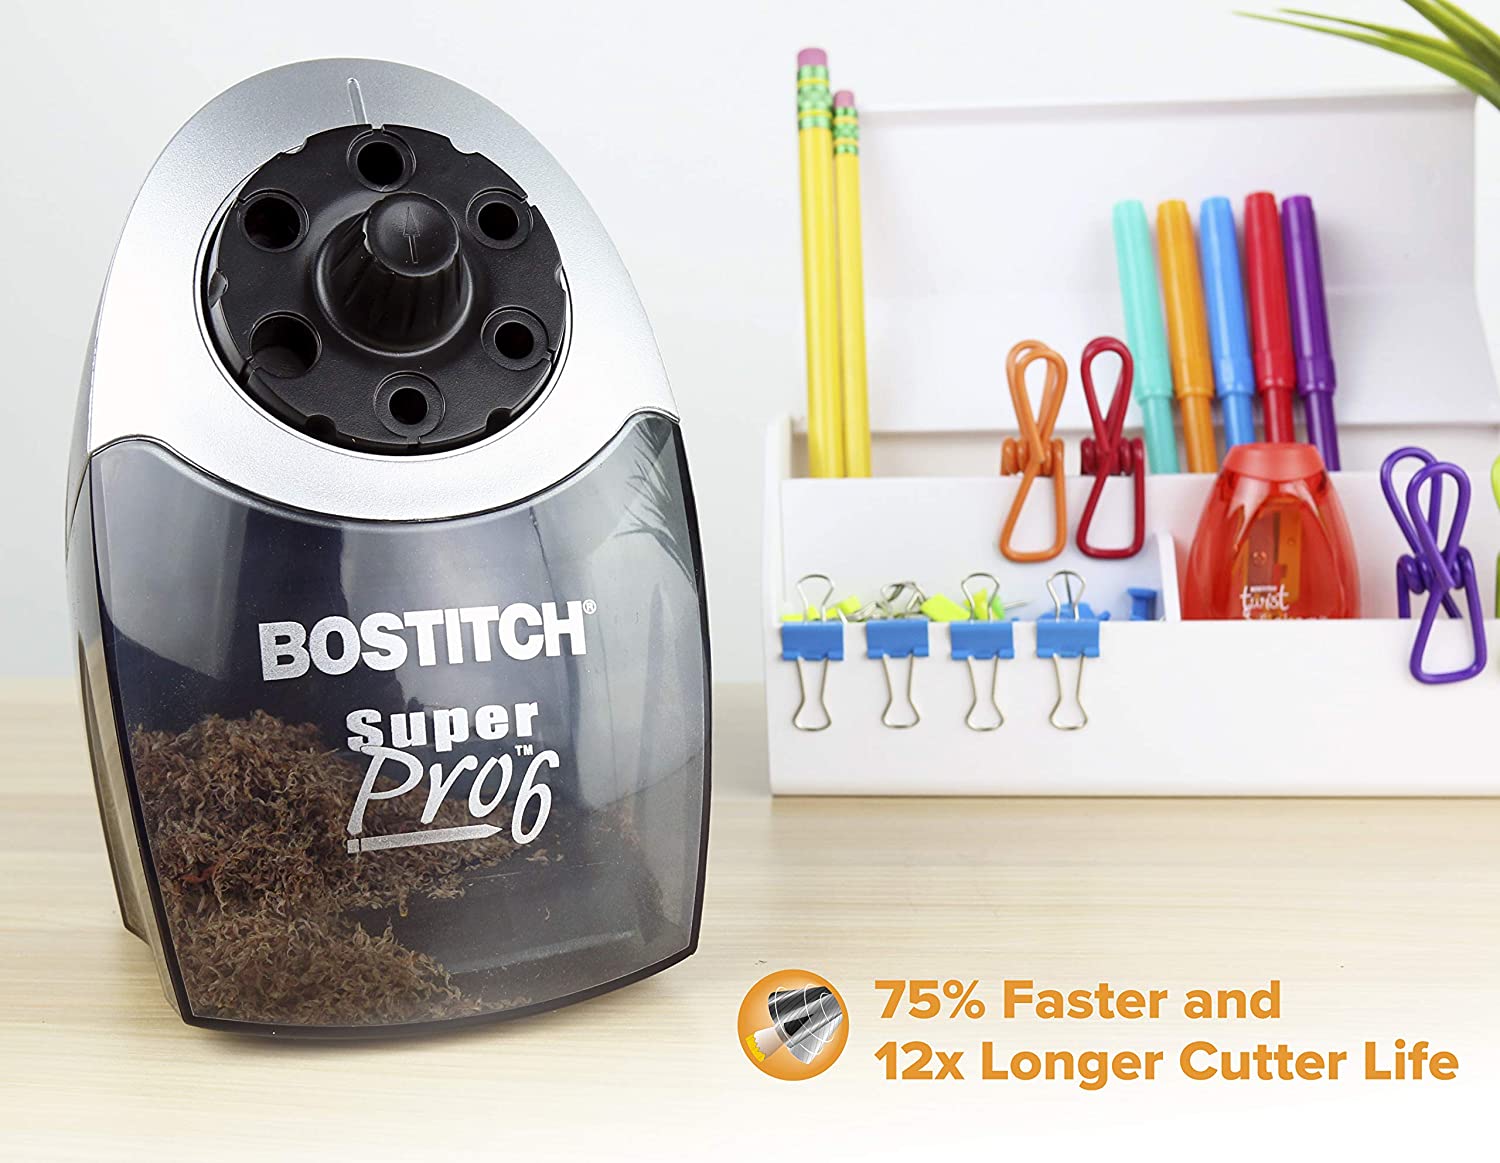 Bostitch SuperPro 6 package